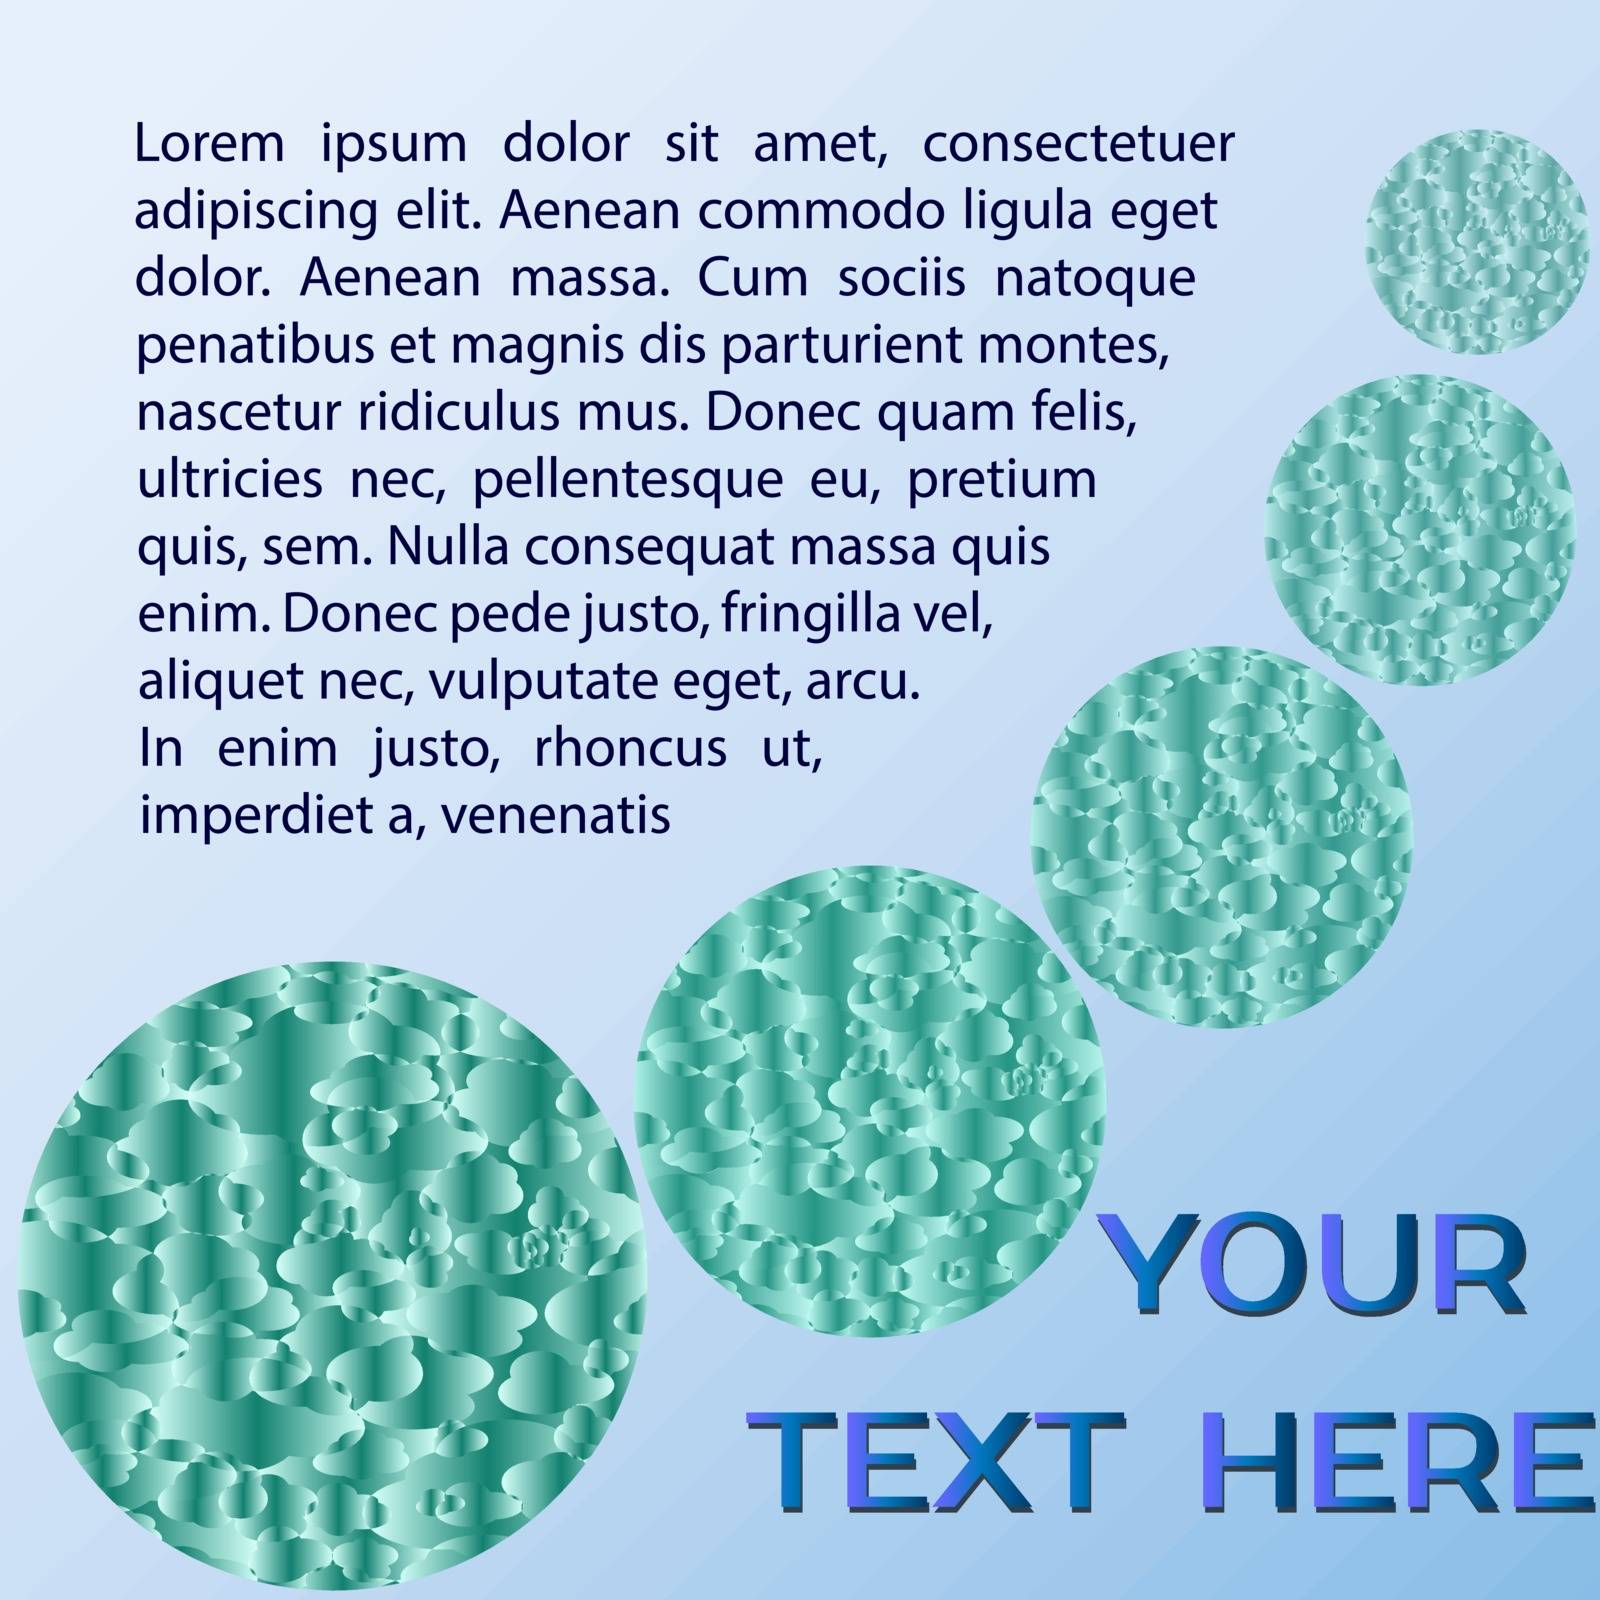 background overlap dimension vector illustration message board for text and message design modern website or card